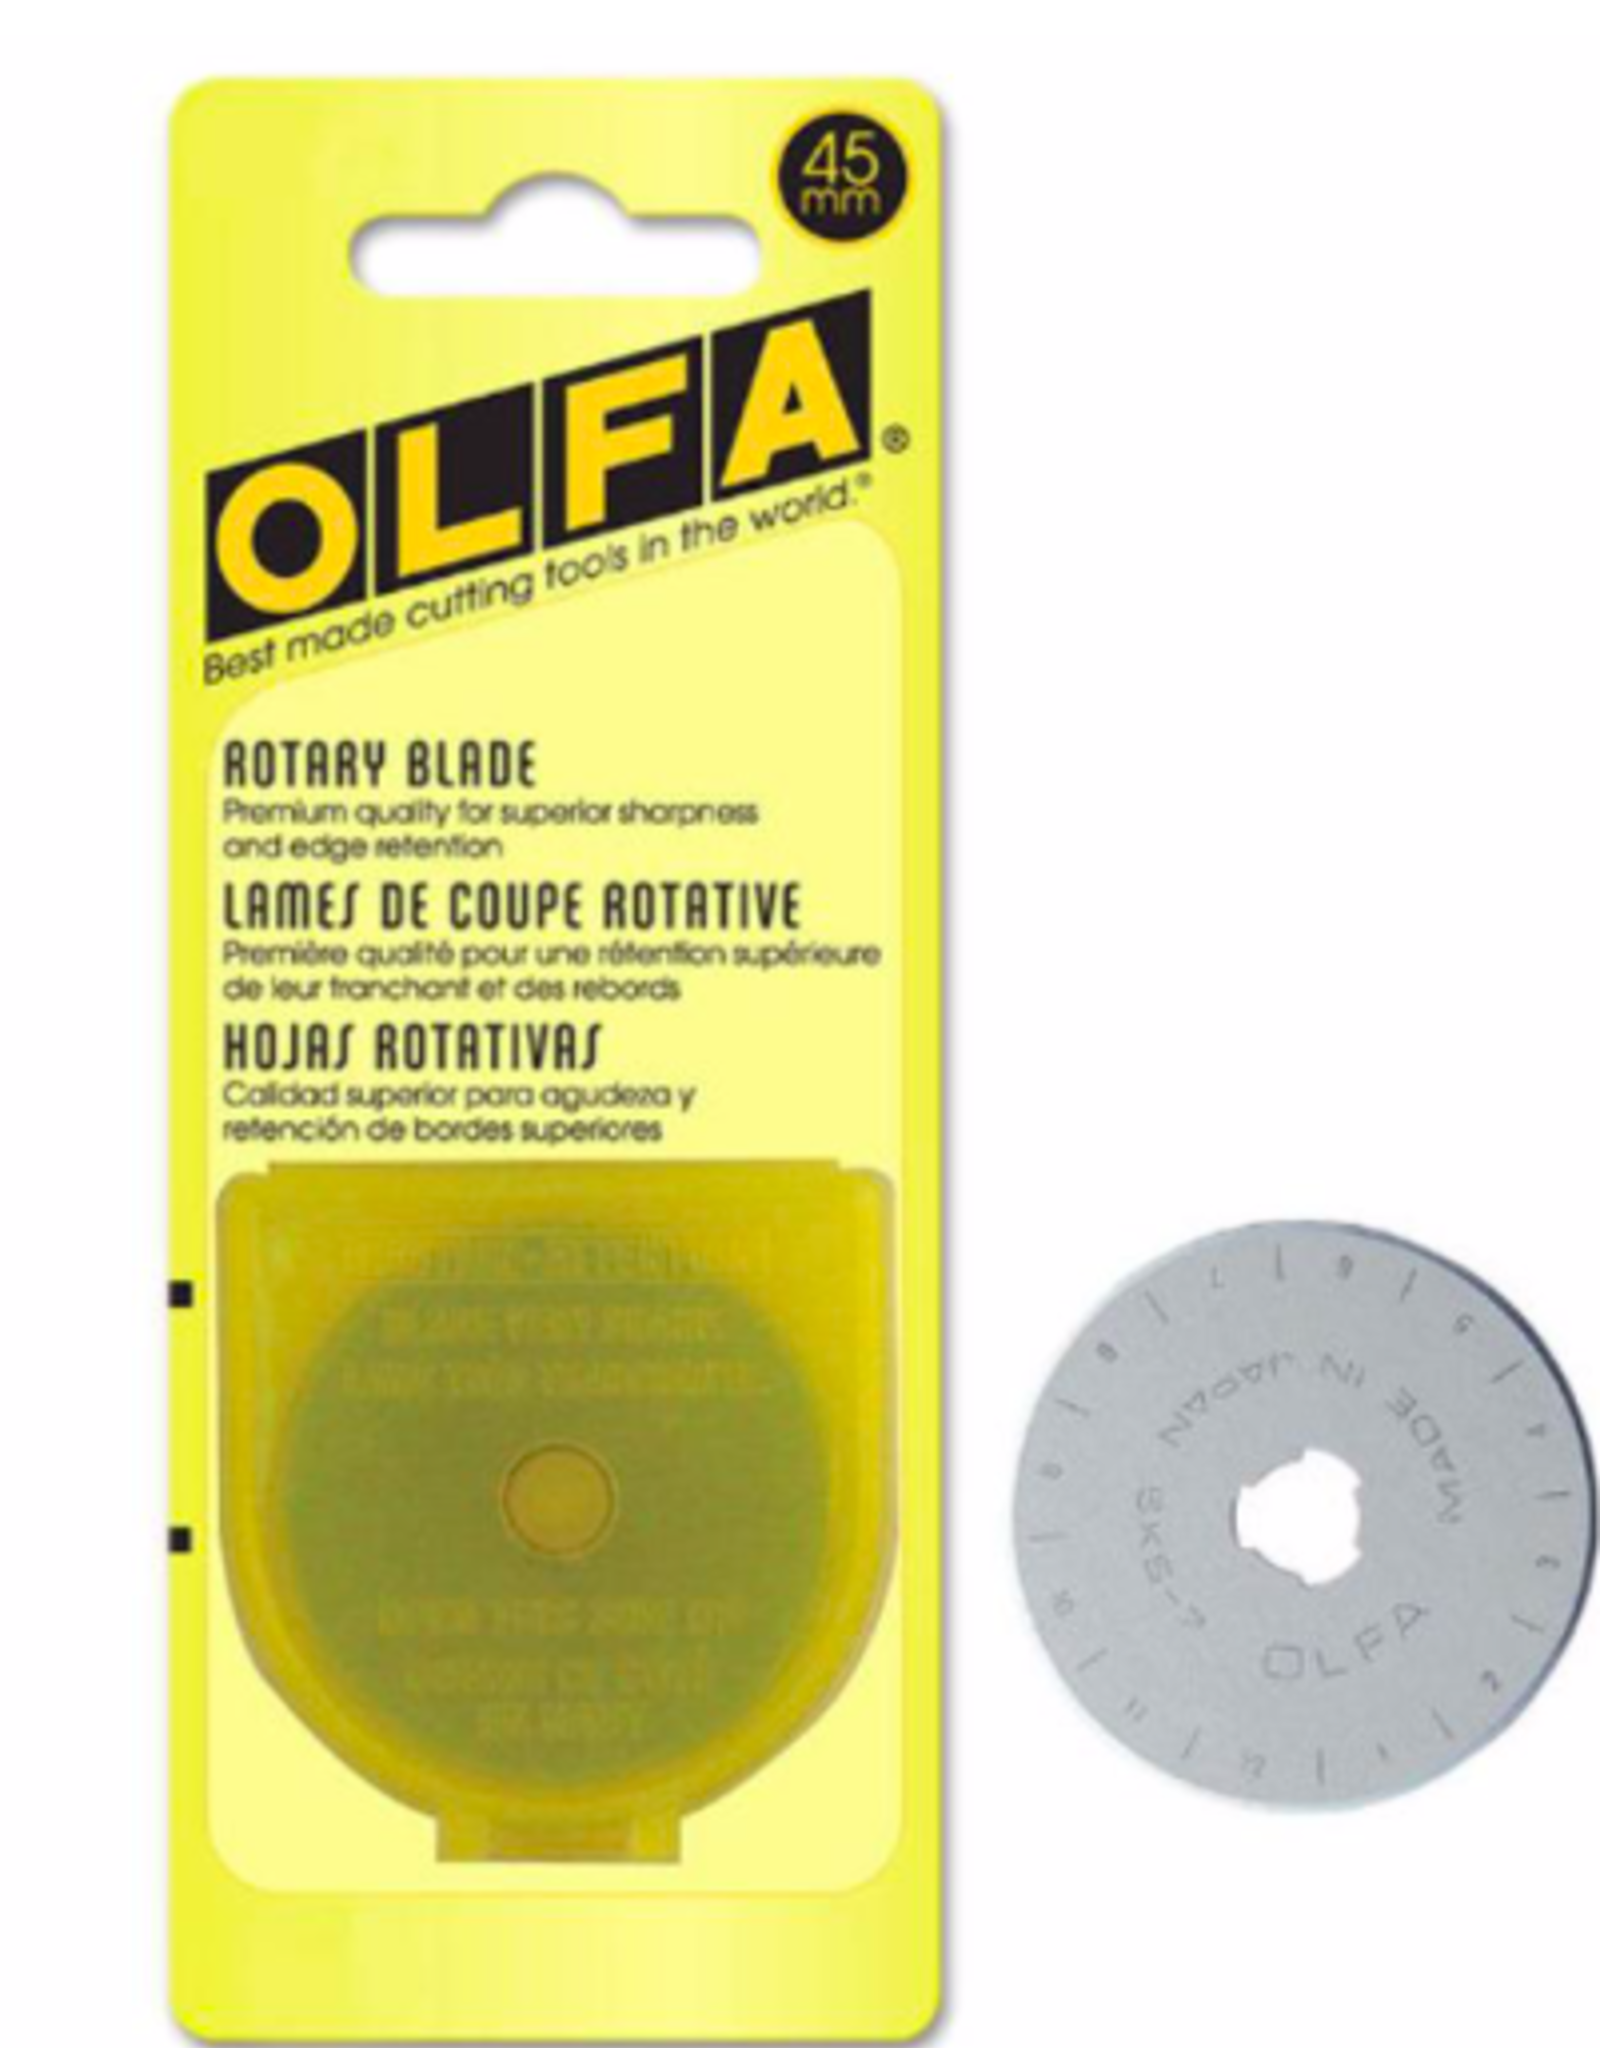 OLFA Rotary blade 45 mm